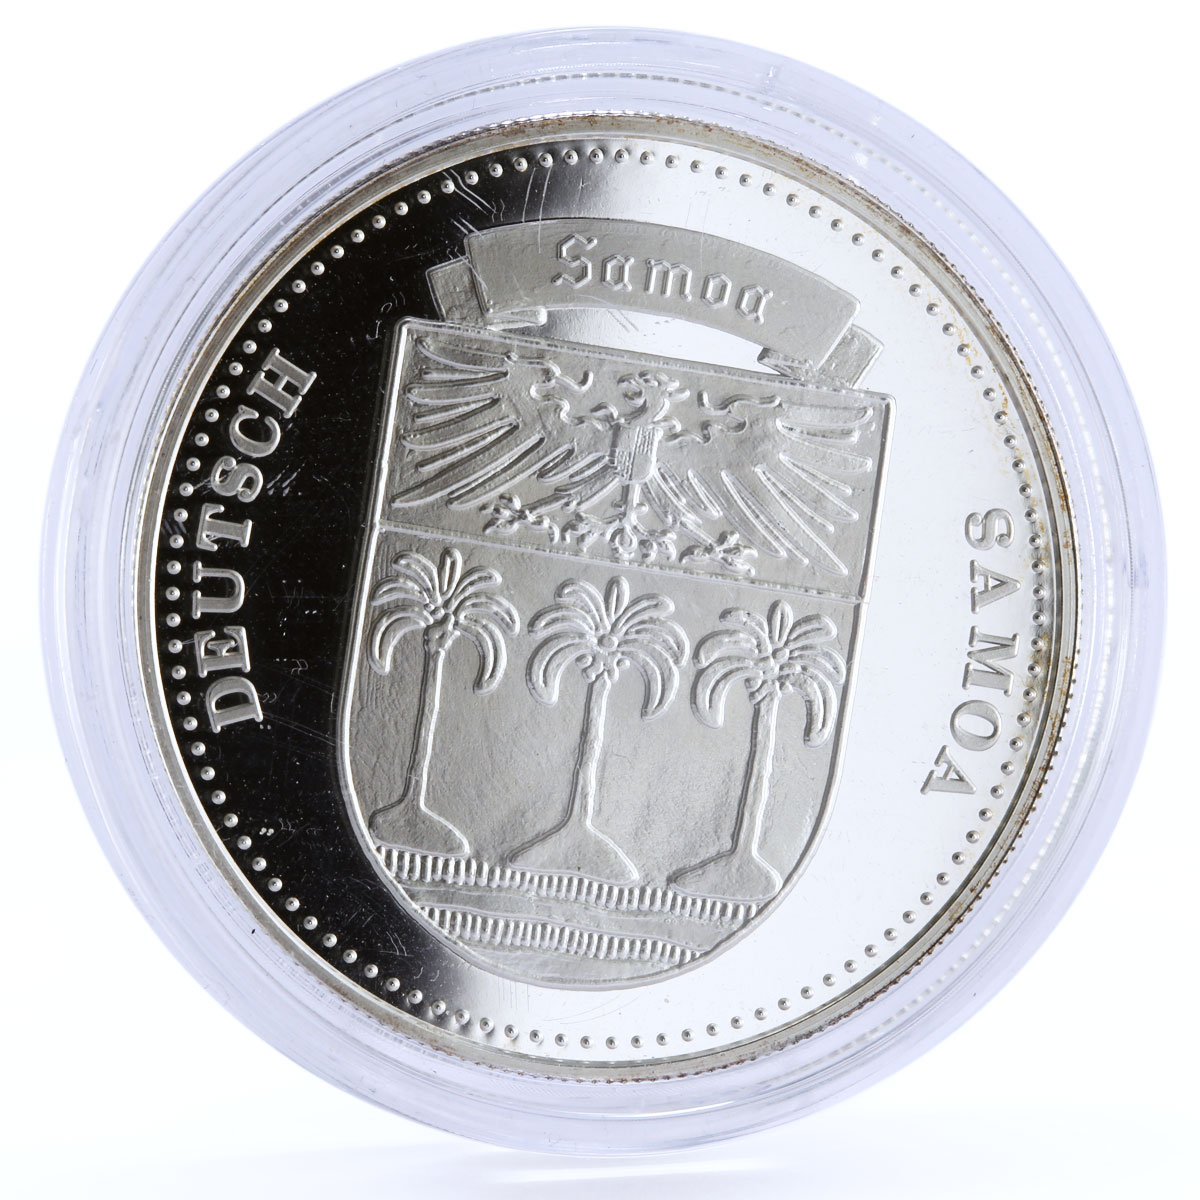 Palau 5 dollars International Coins series German Samoa silver coin 1999